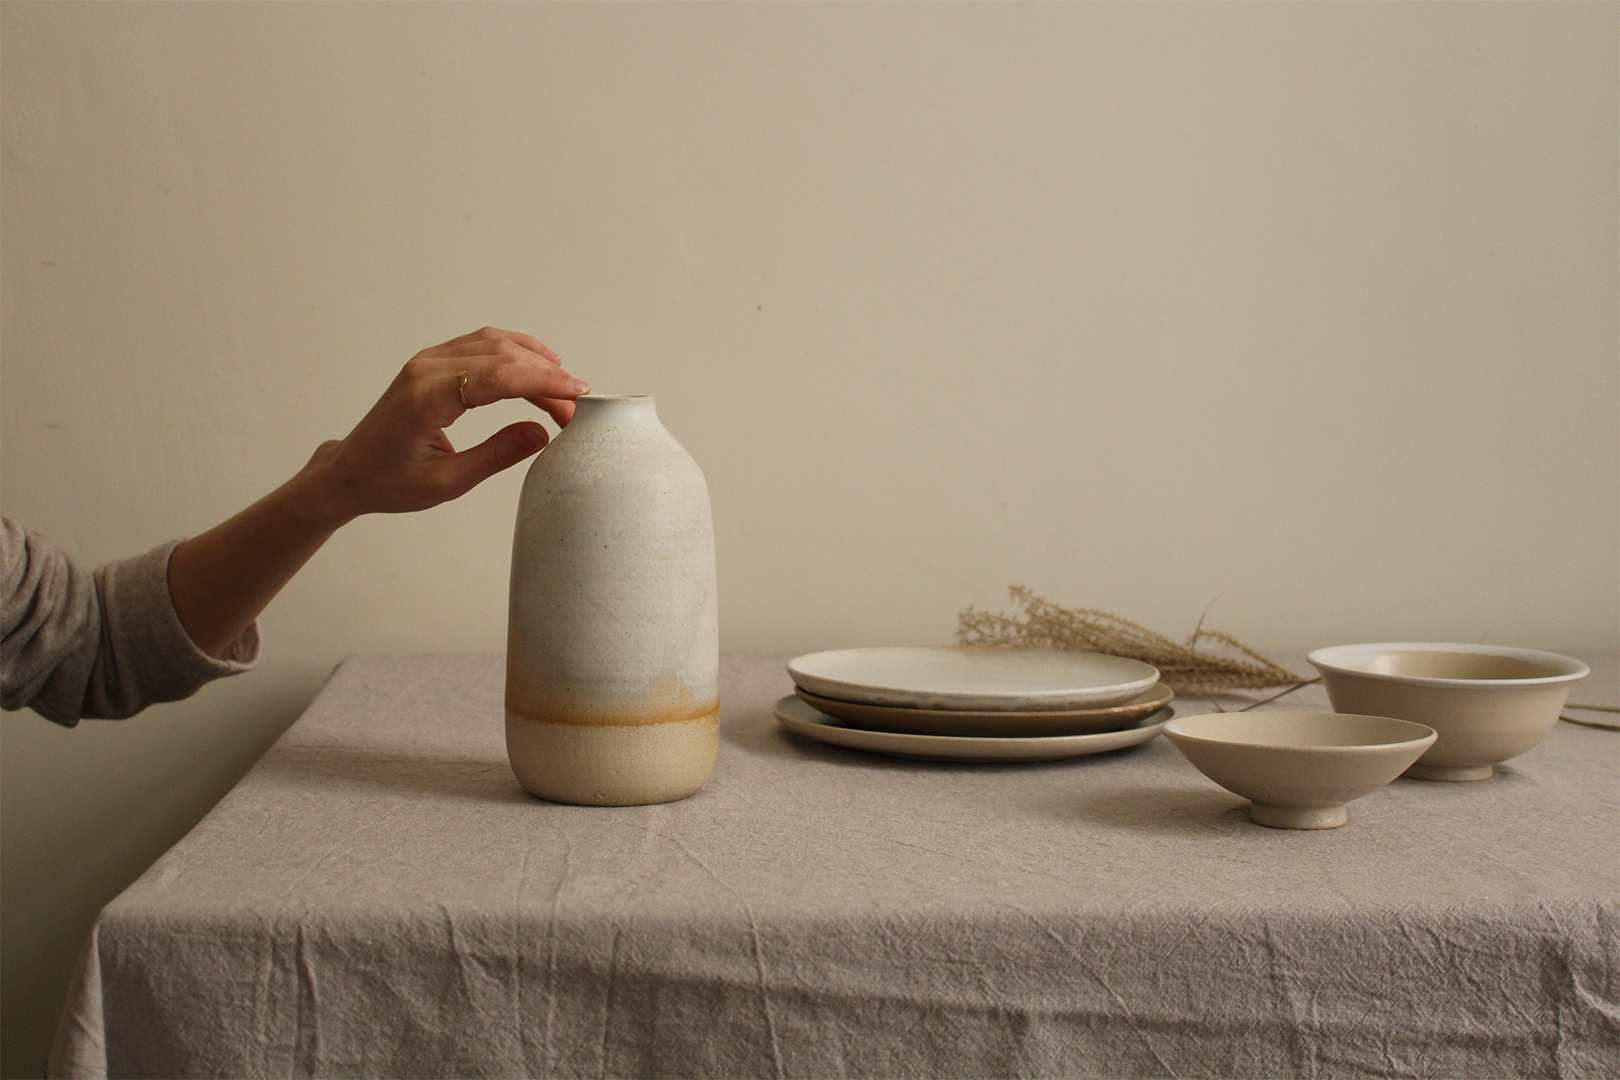 Meditative ceramics from Poland | Nami studio